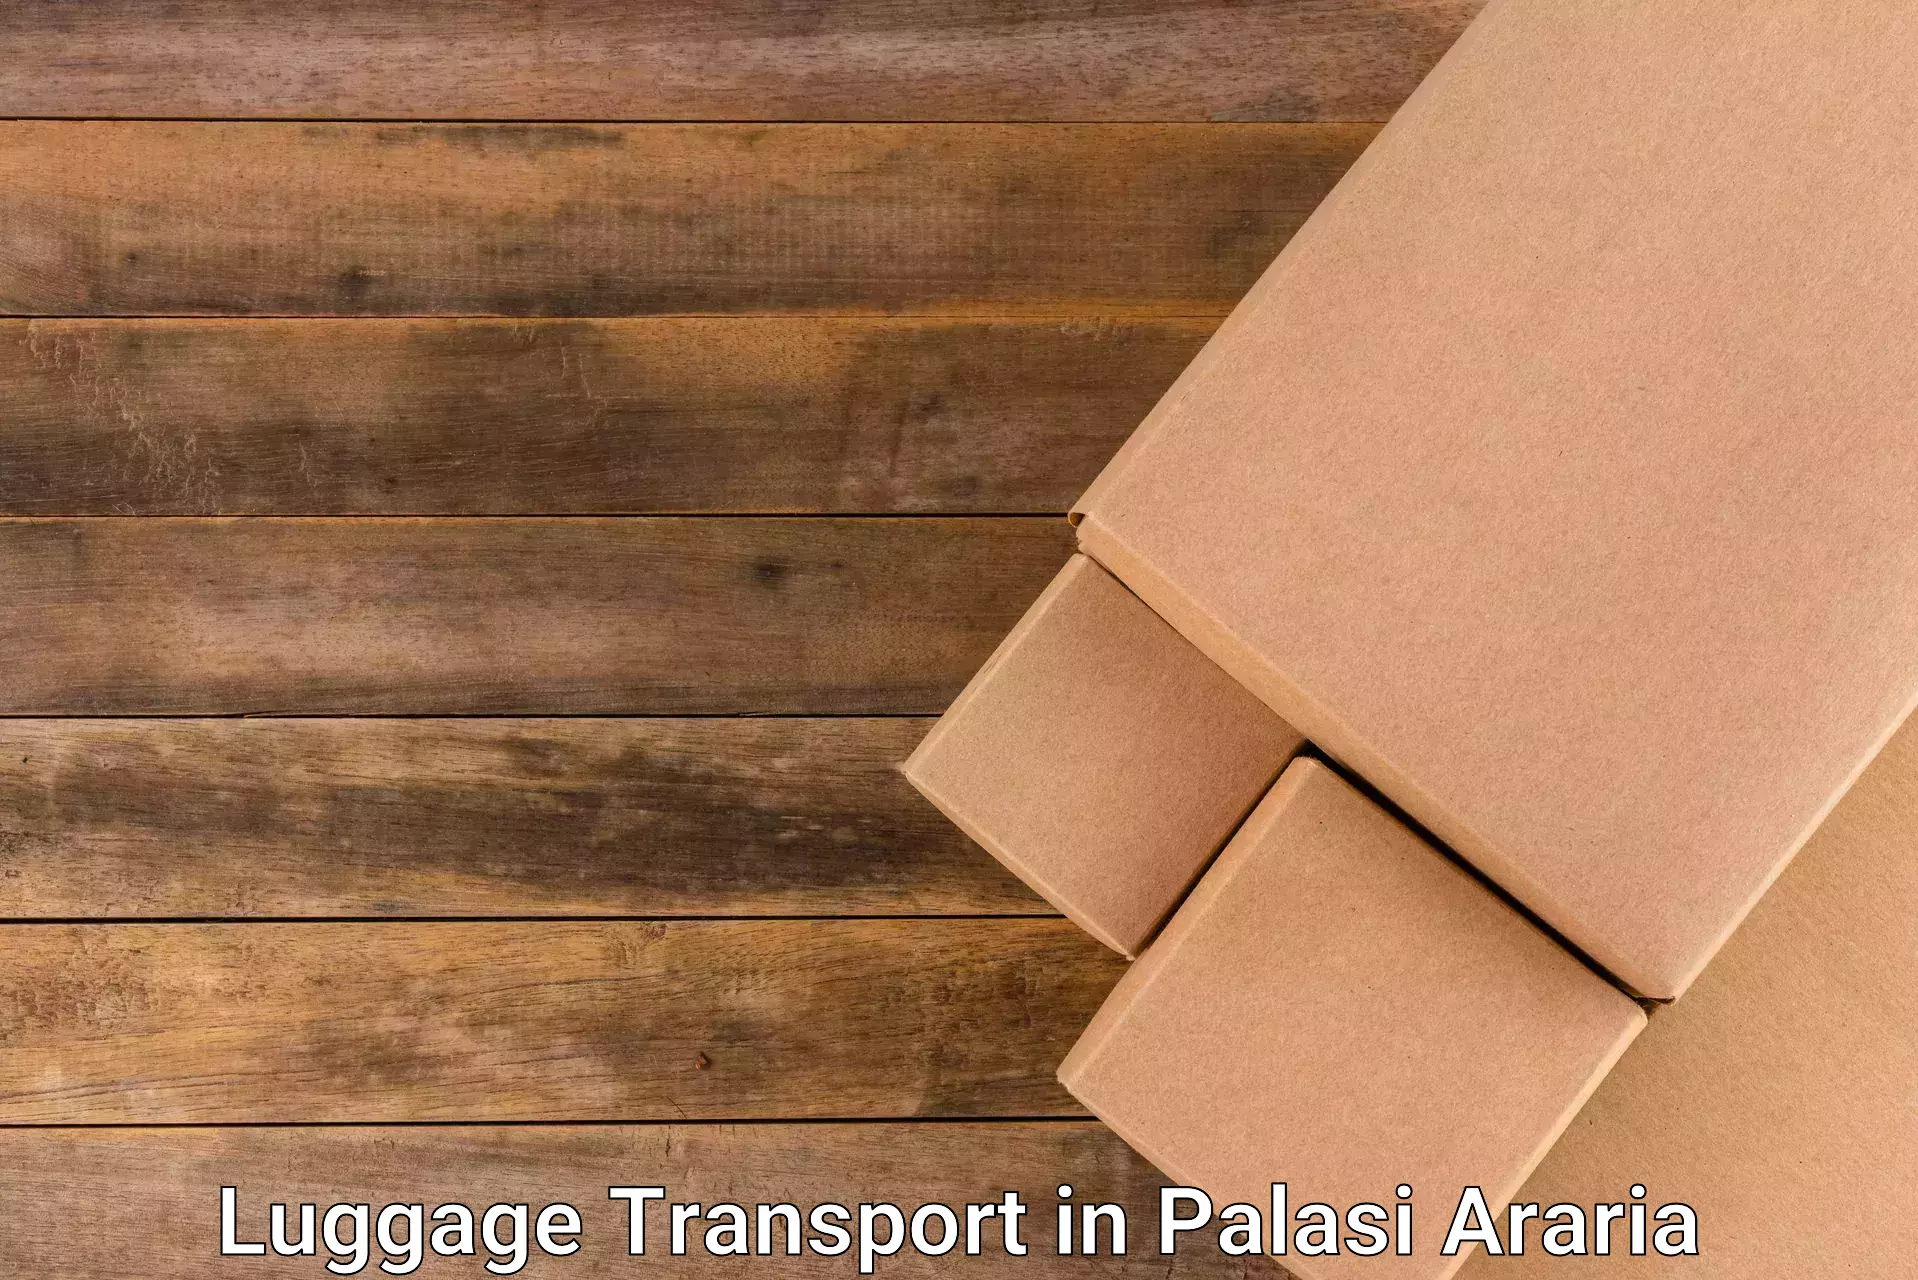 Luggage transfer service in Palasi Araria